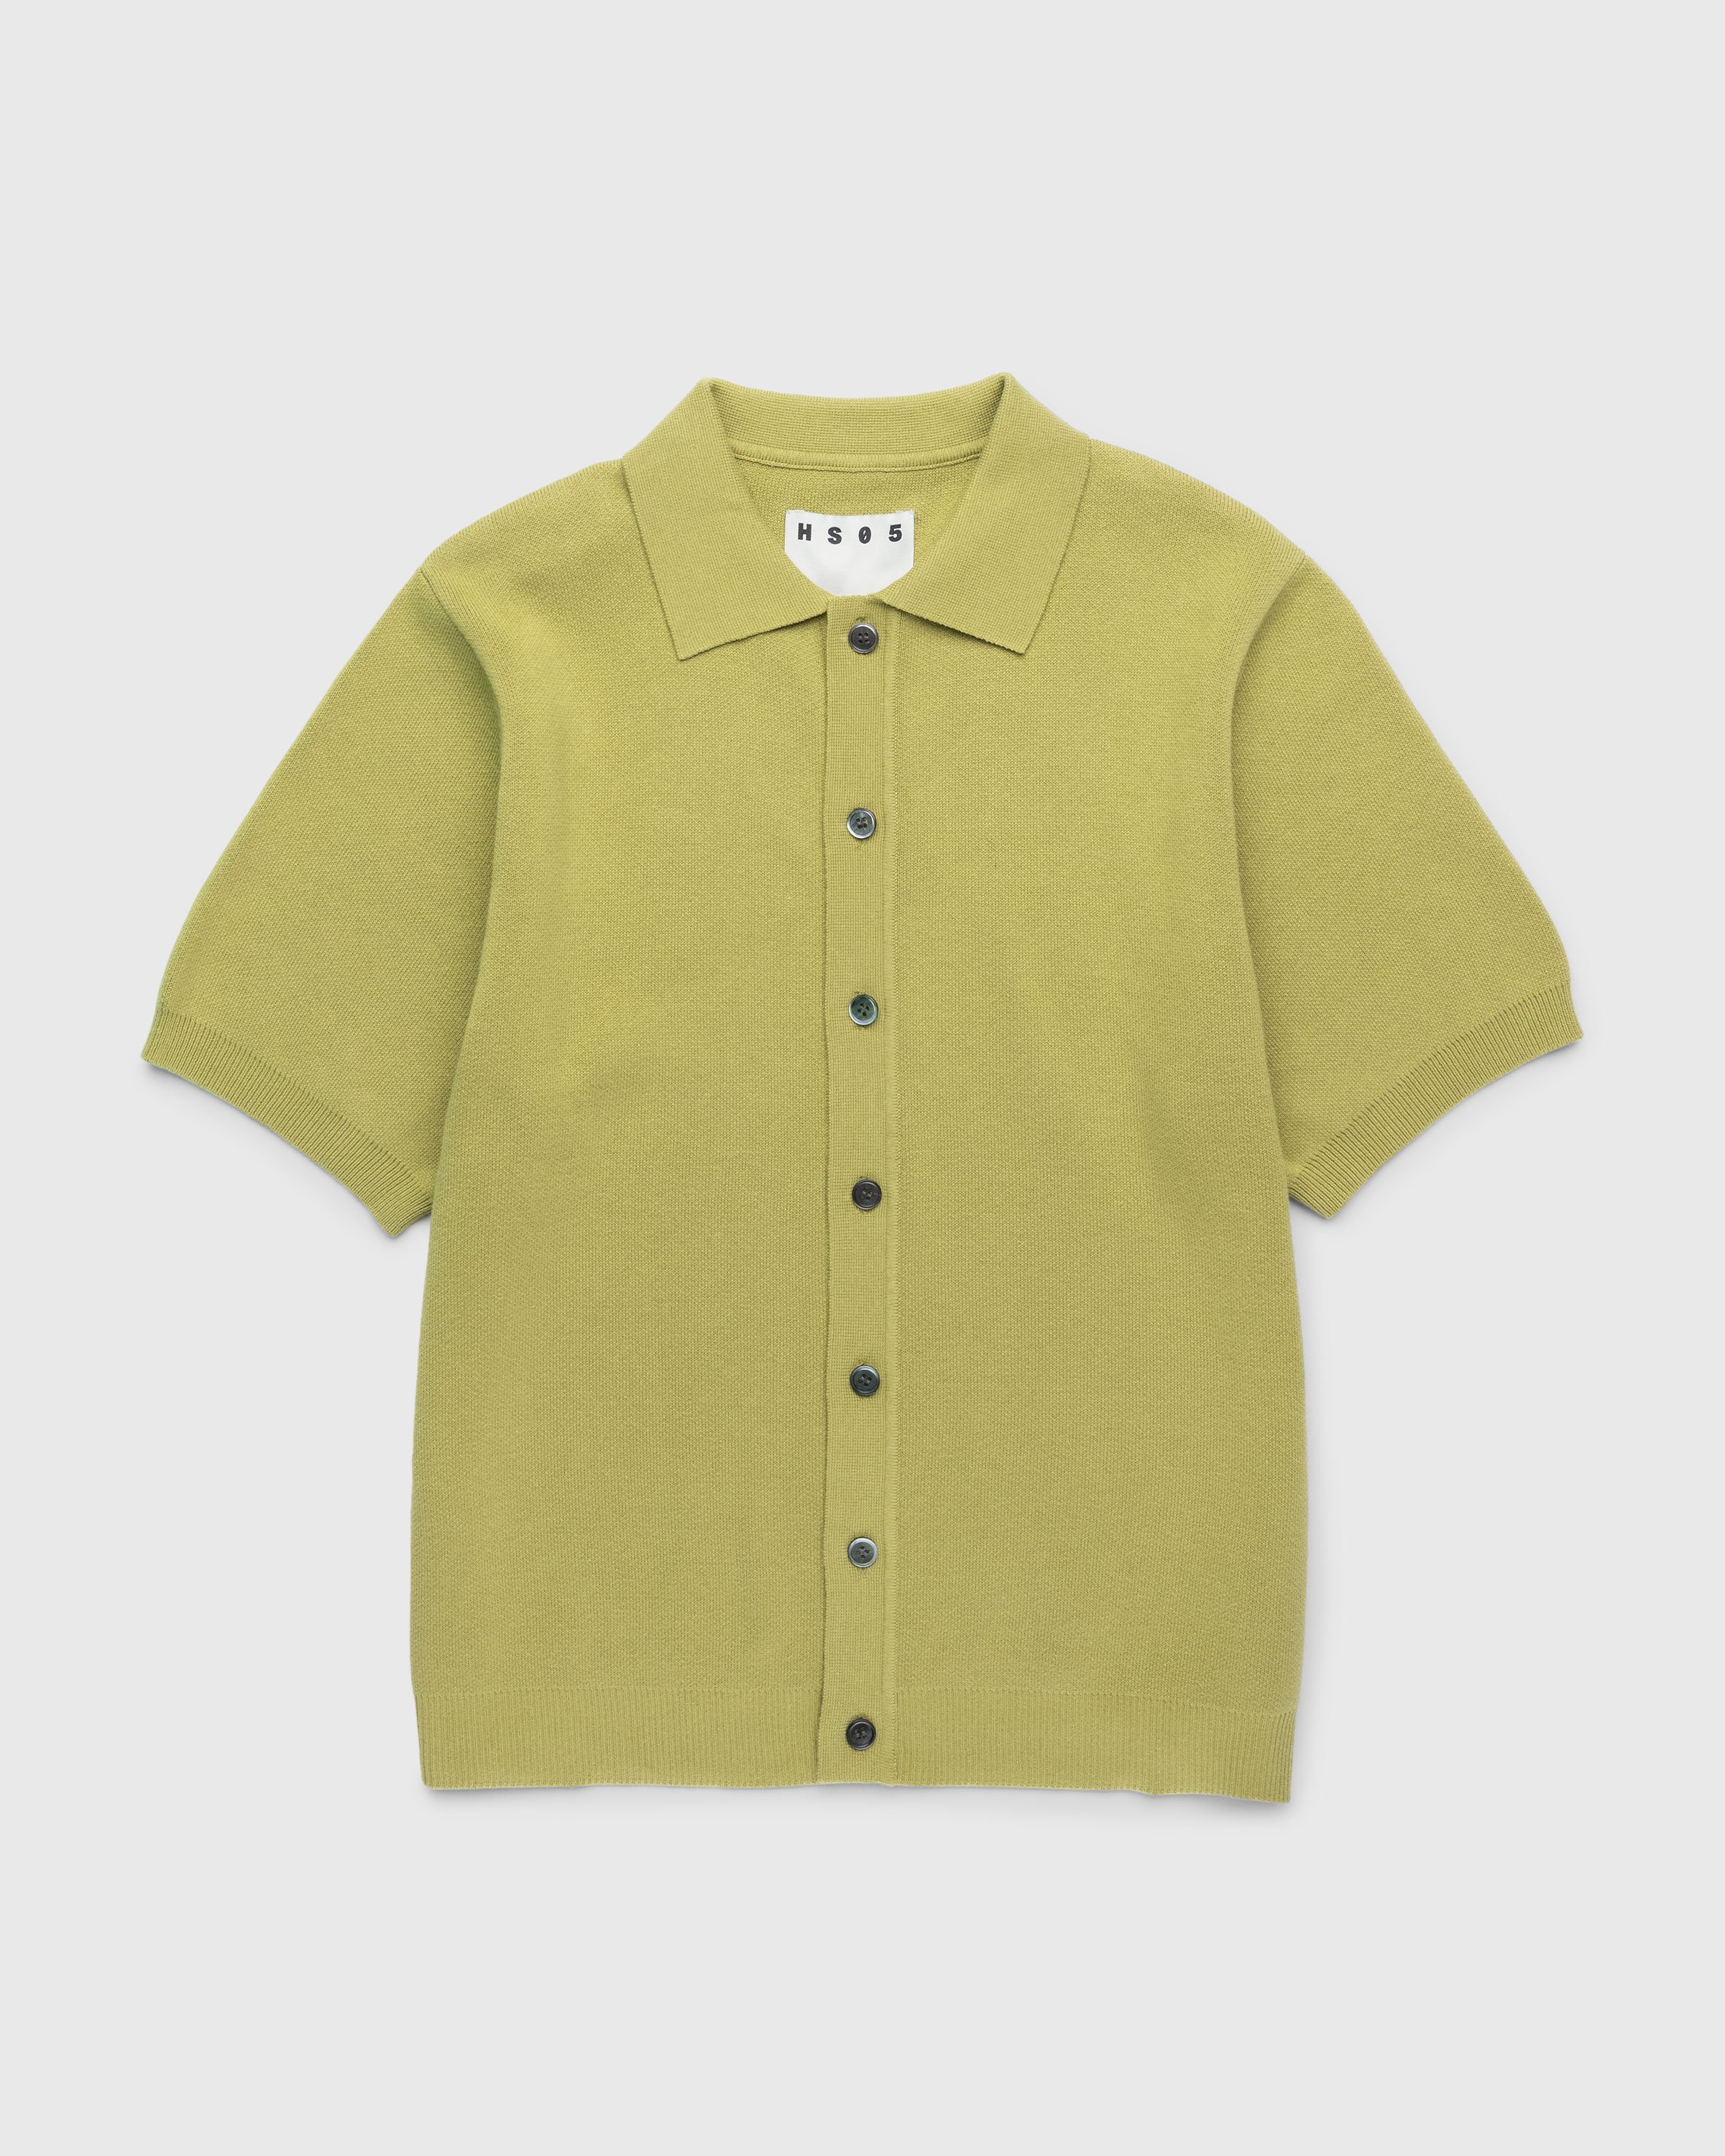 Highsnobiety HS05 - Cotton Knit Shirt Green - Clothing - Green - Image 1